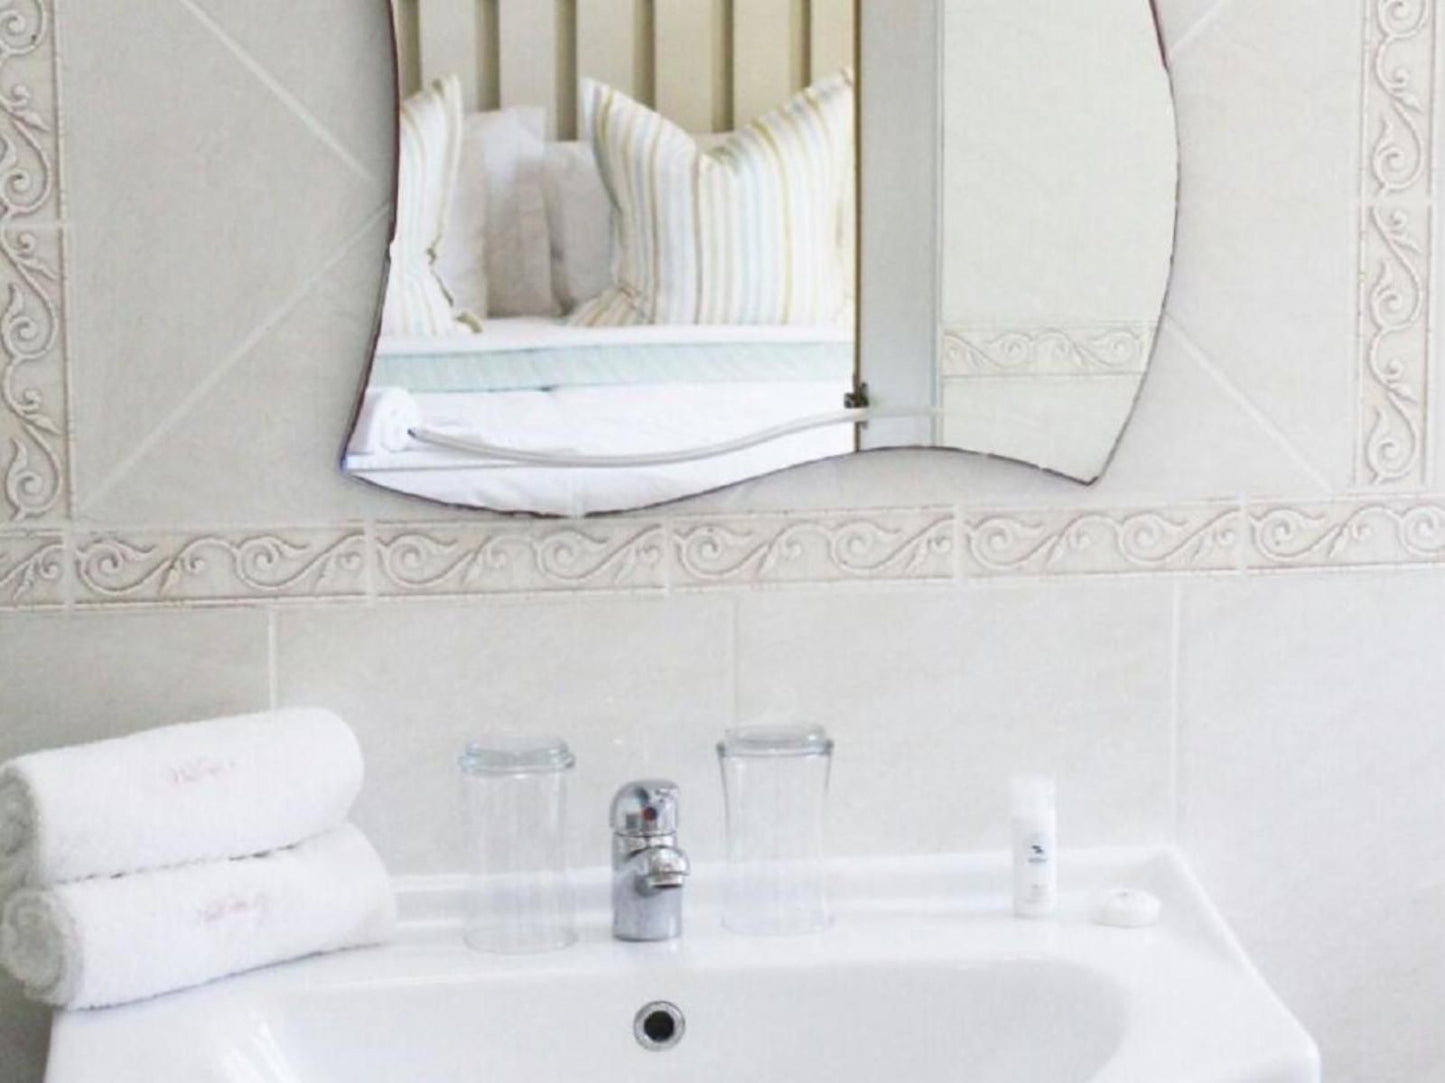 At Dom S Bandb Zimbali Coastal Estate Ballito Kwazulu Natal South Africa Unsaturated, Bright, Bathroom